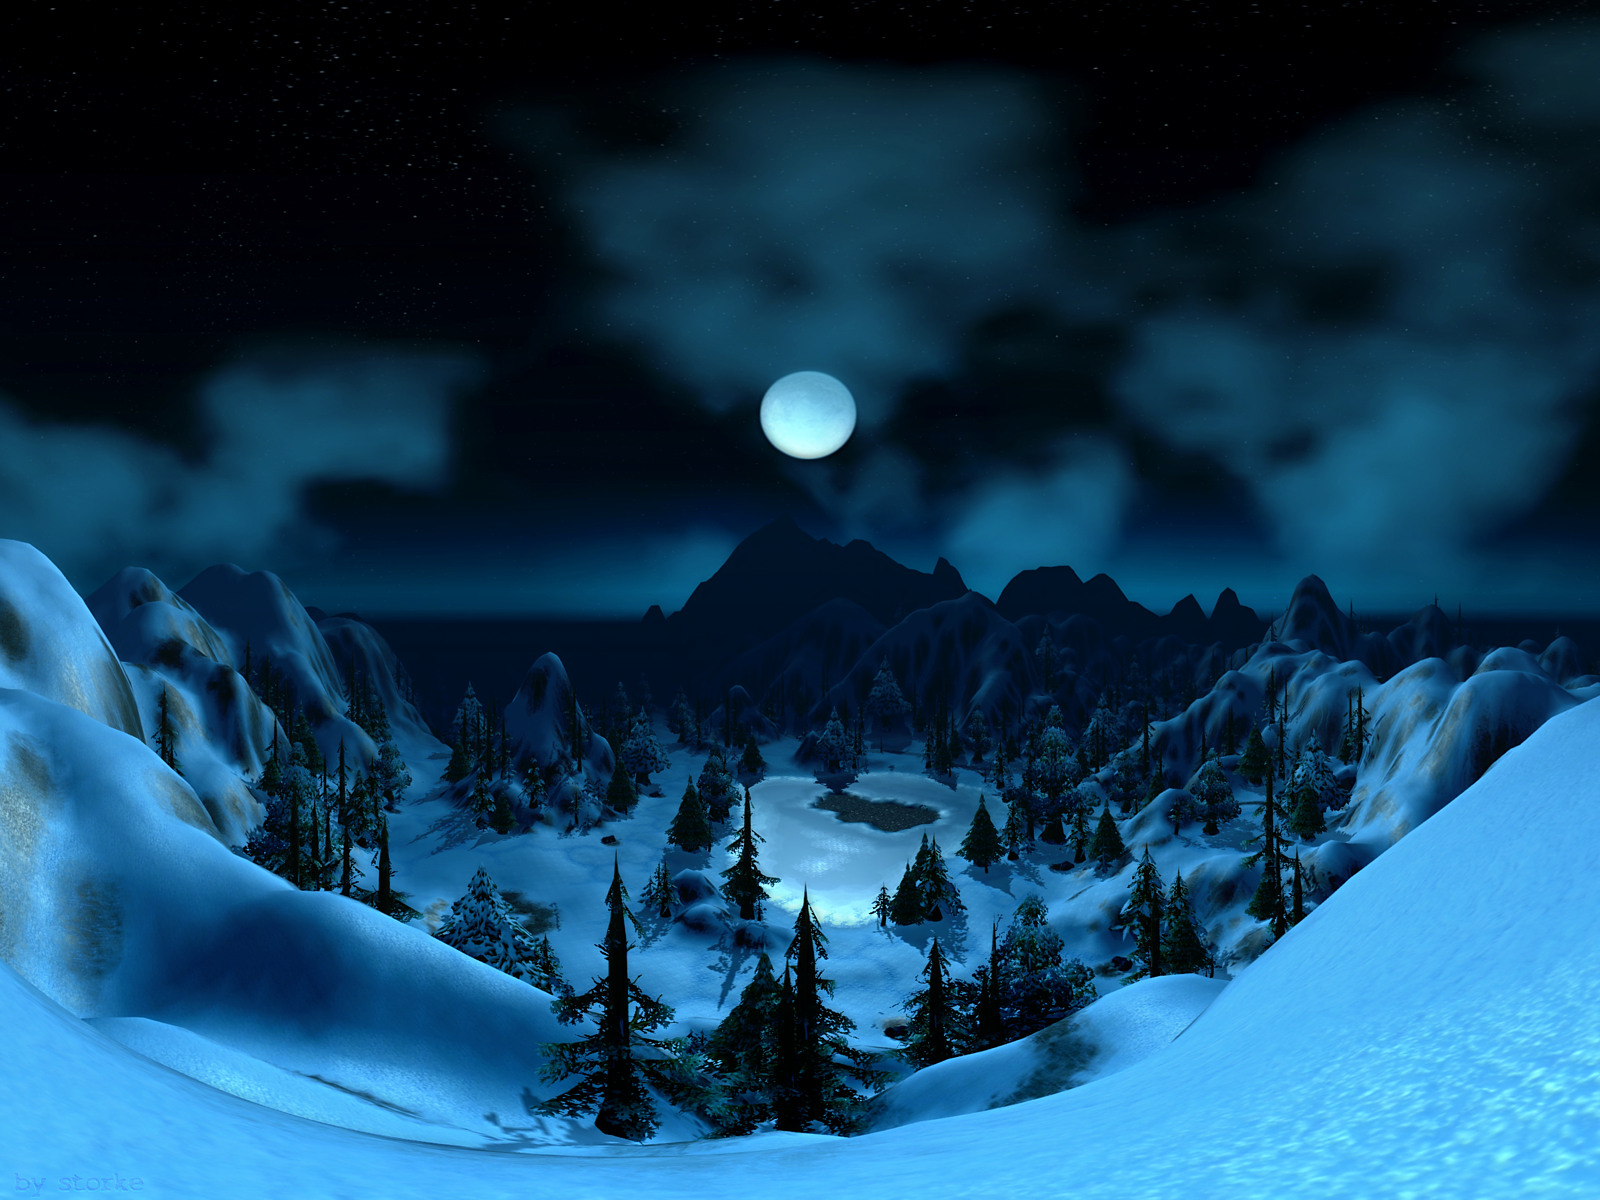 Starry sky illuminates snowy landscape with moon, tree standing tall at night.